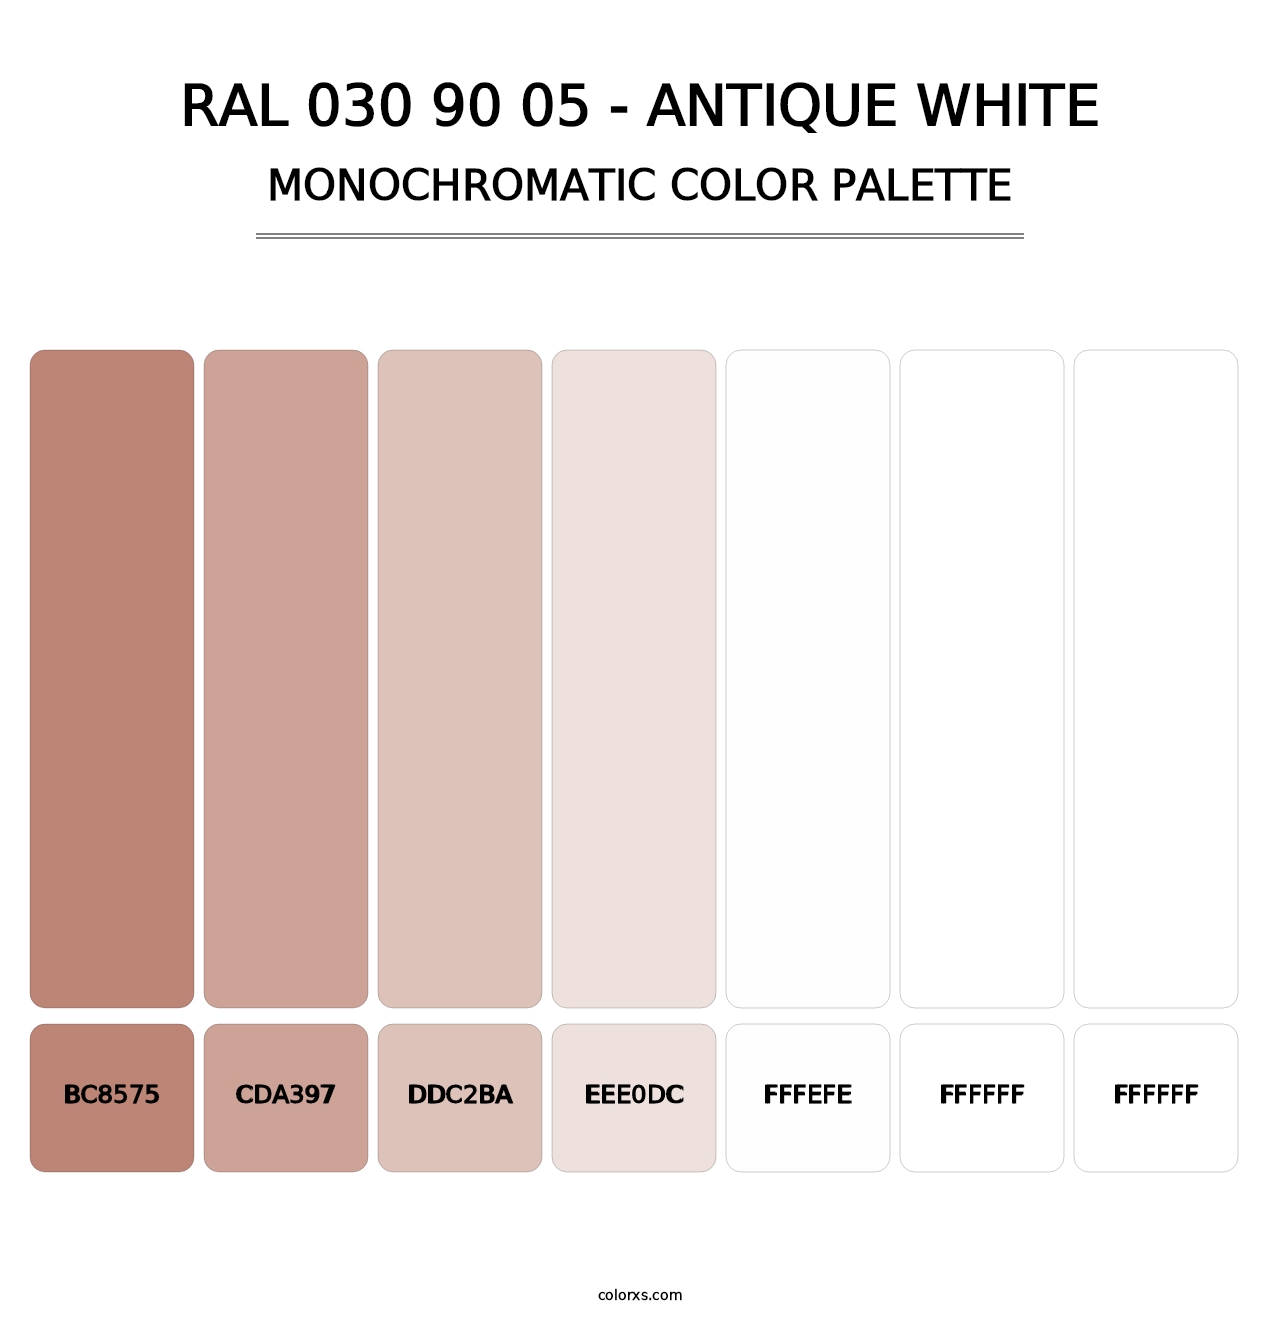 RAL 030 90 05 - Antique White - Monochromatic Color Palette